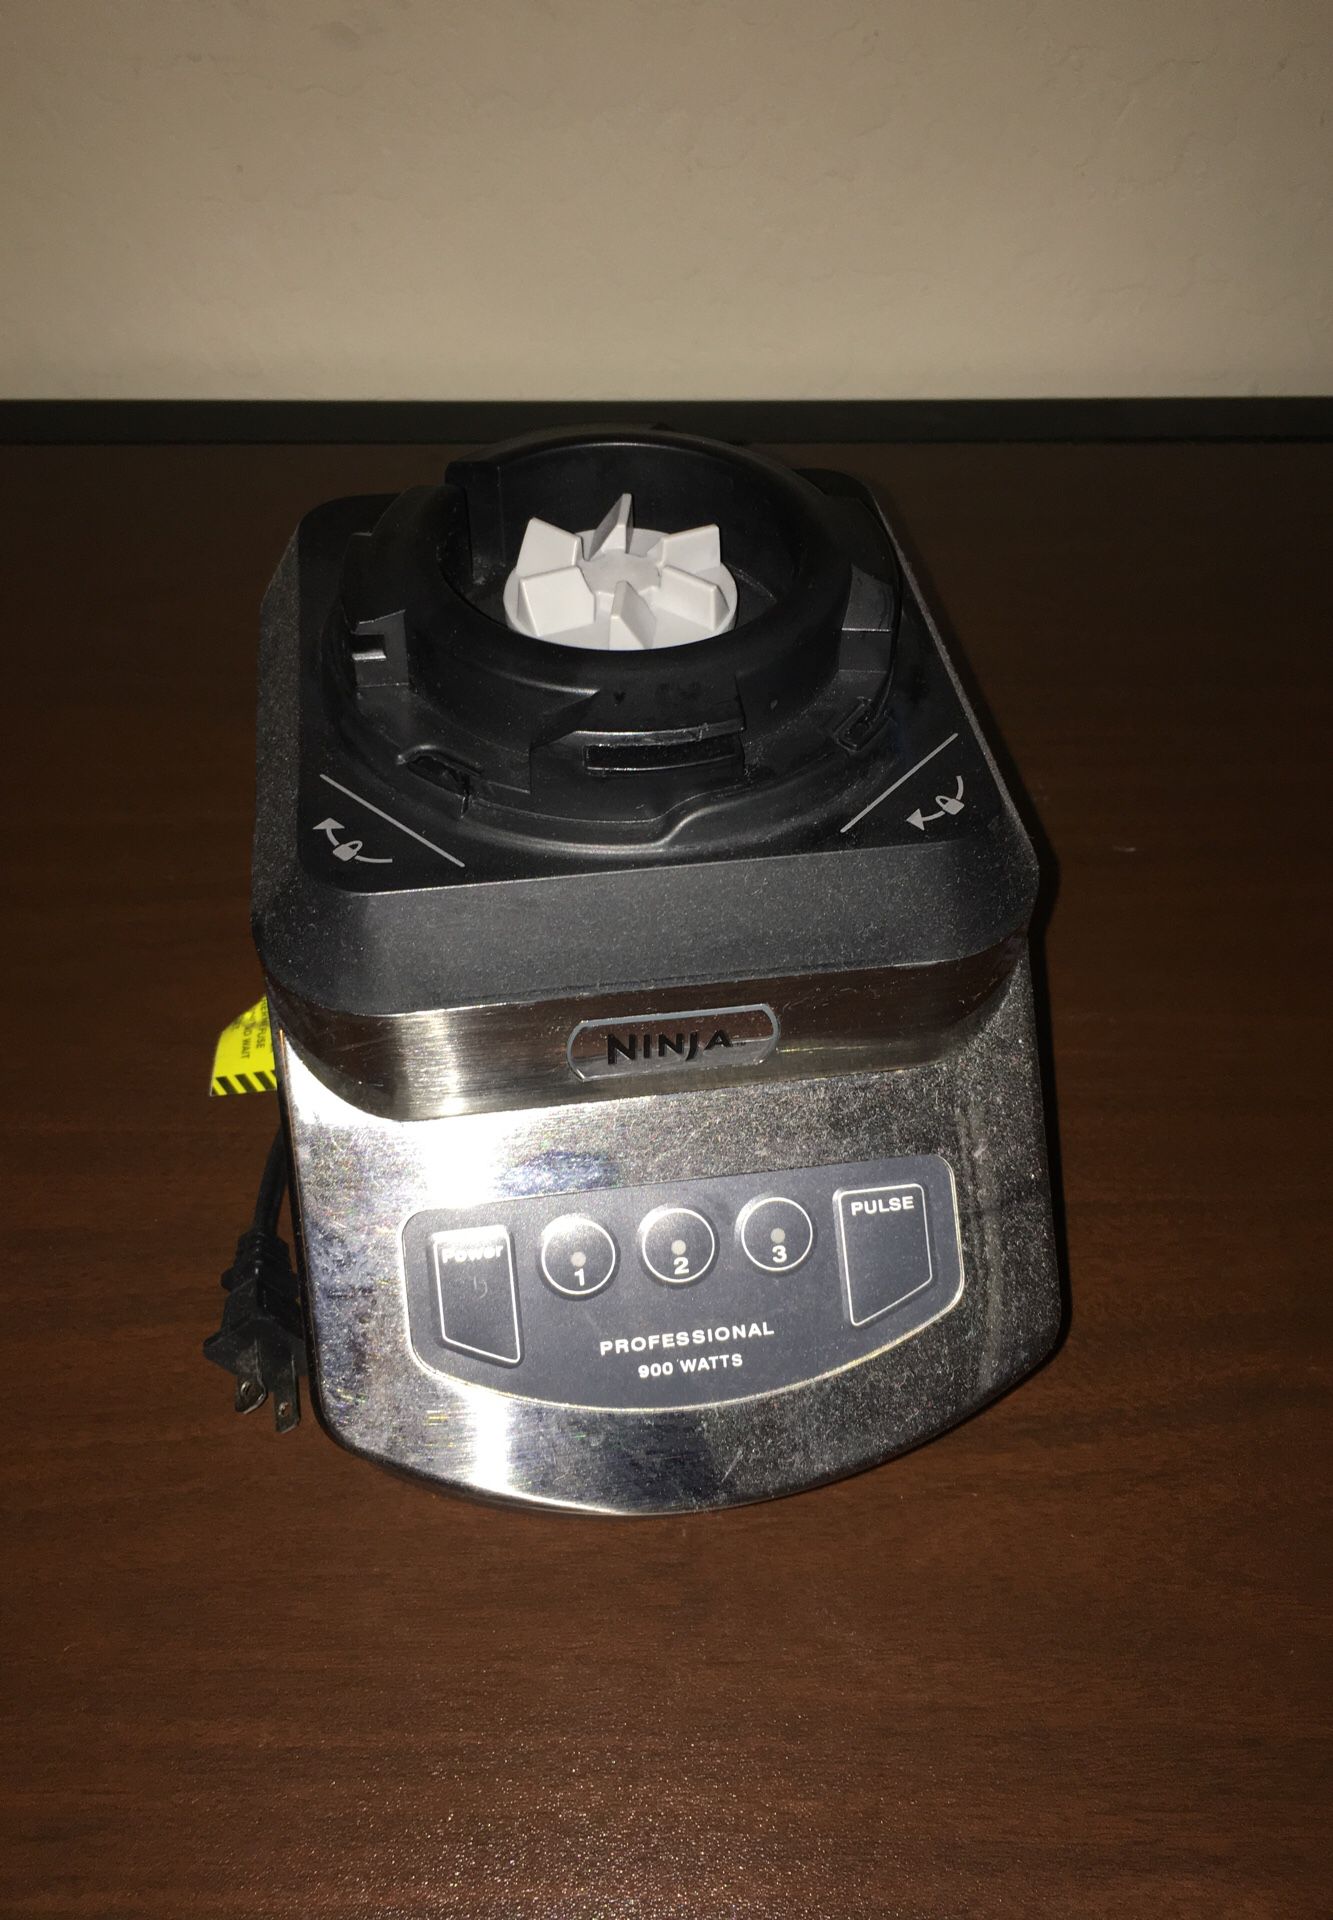 Ninja Professional 900 Watts Blender - appliances - by owner